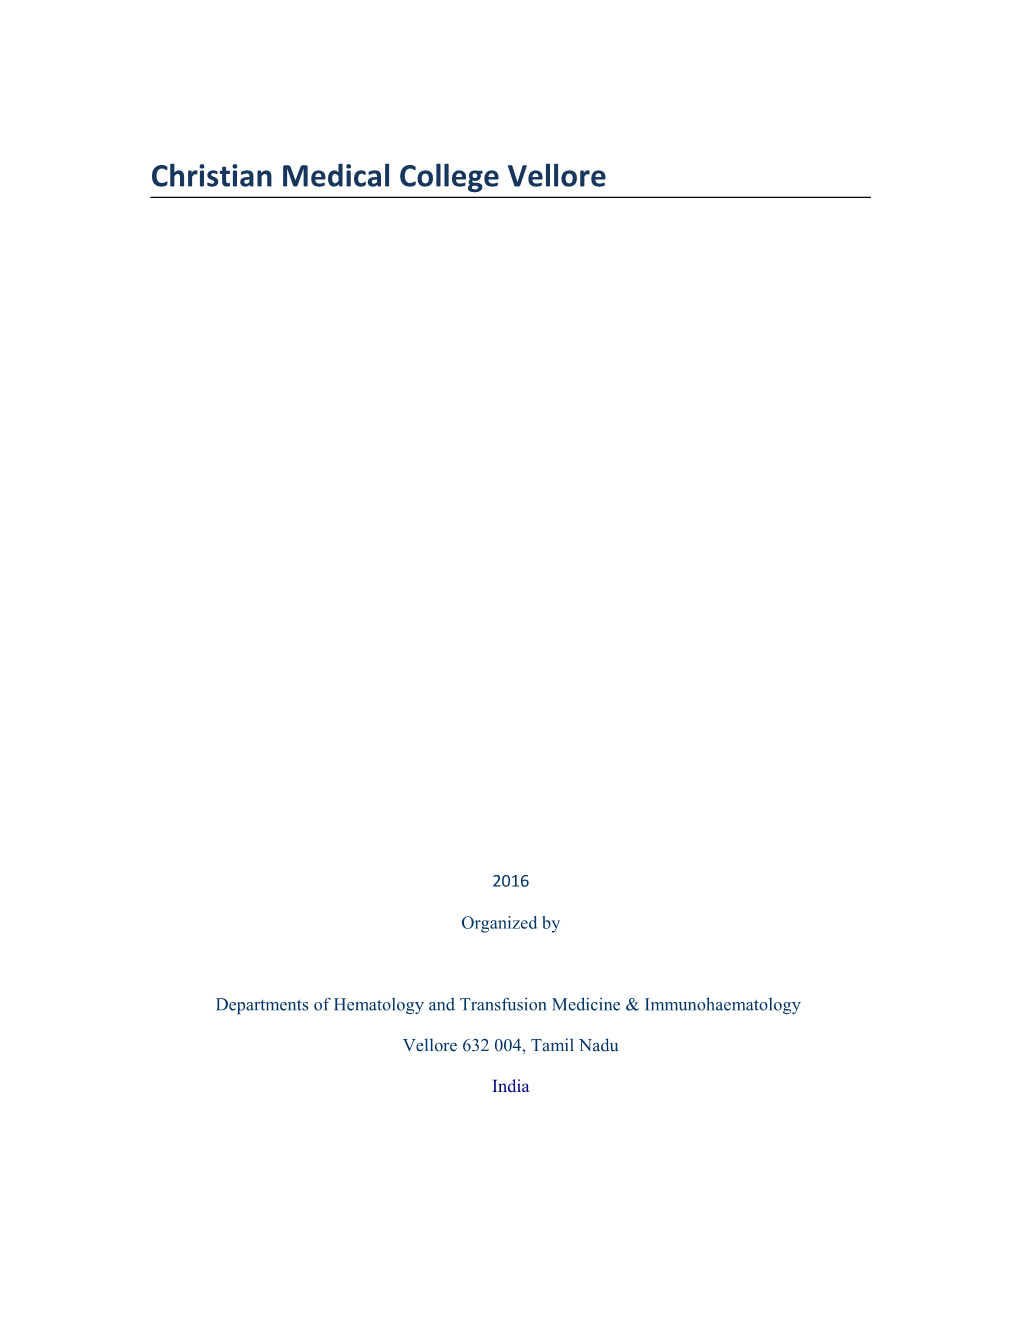 Cmc Vellore Eqas Program Transfusion